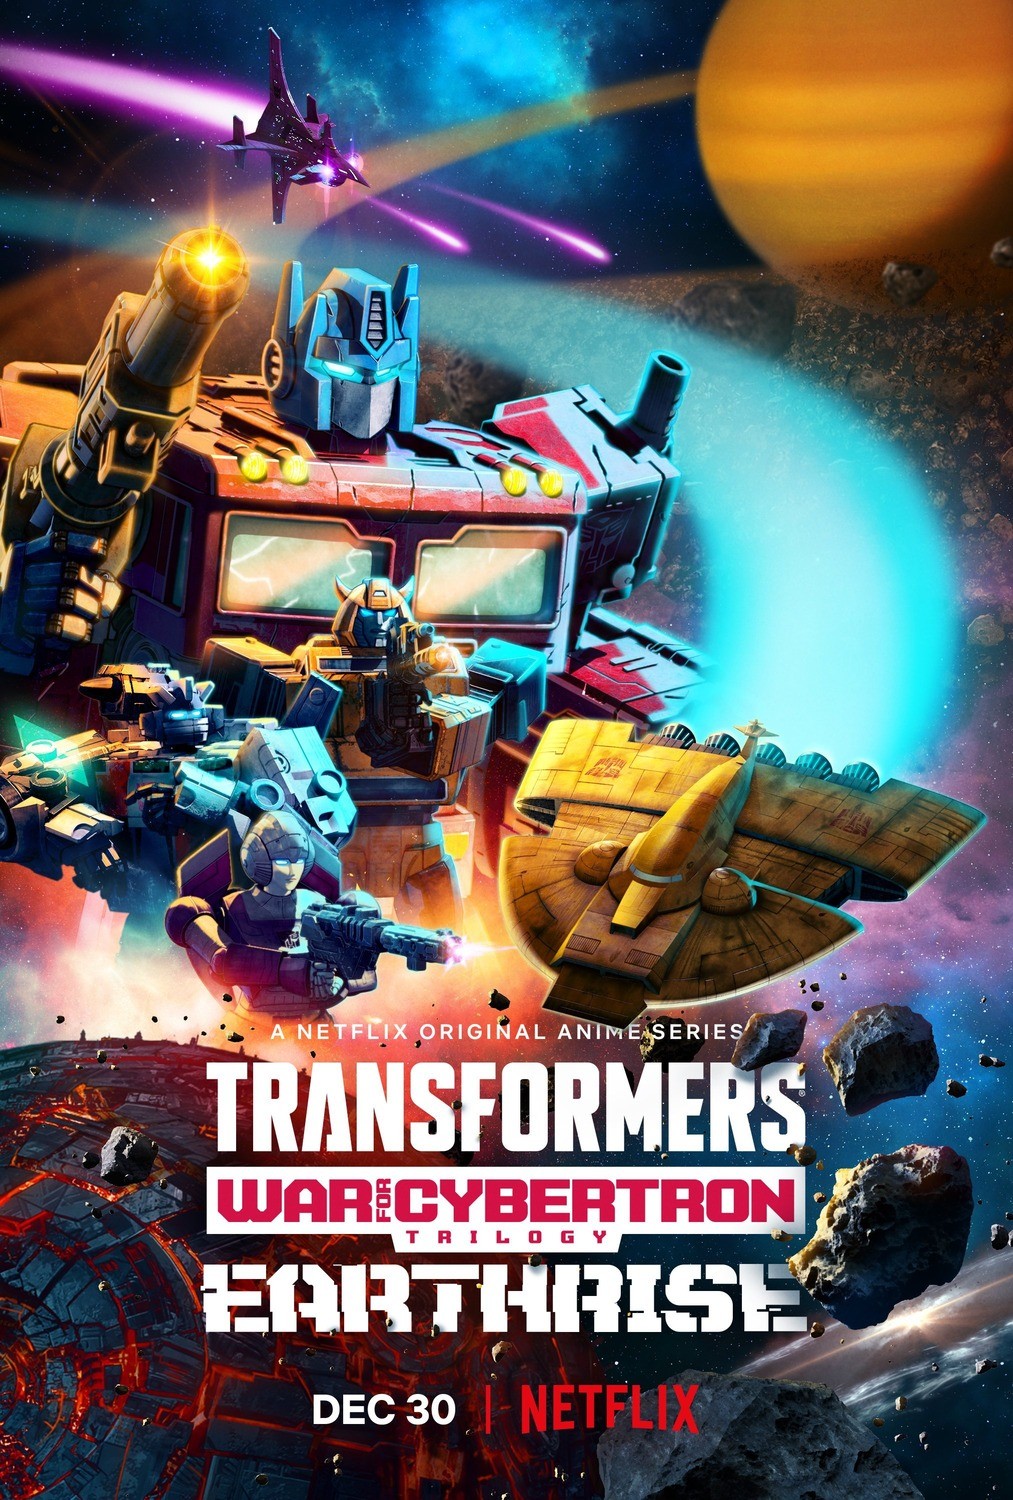 Трансформеры: Война за Кибертрон / Transformers: War for Cybertron